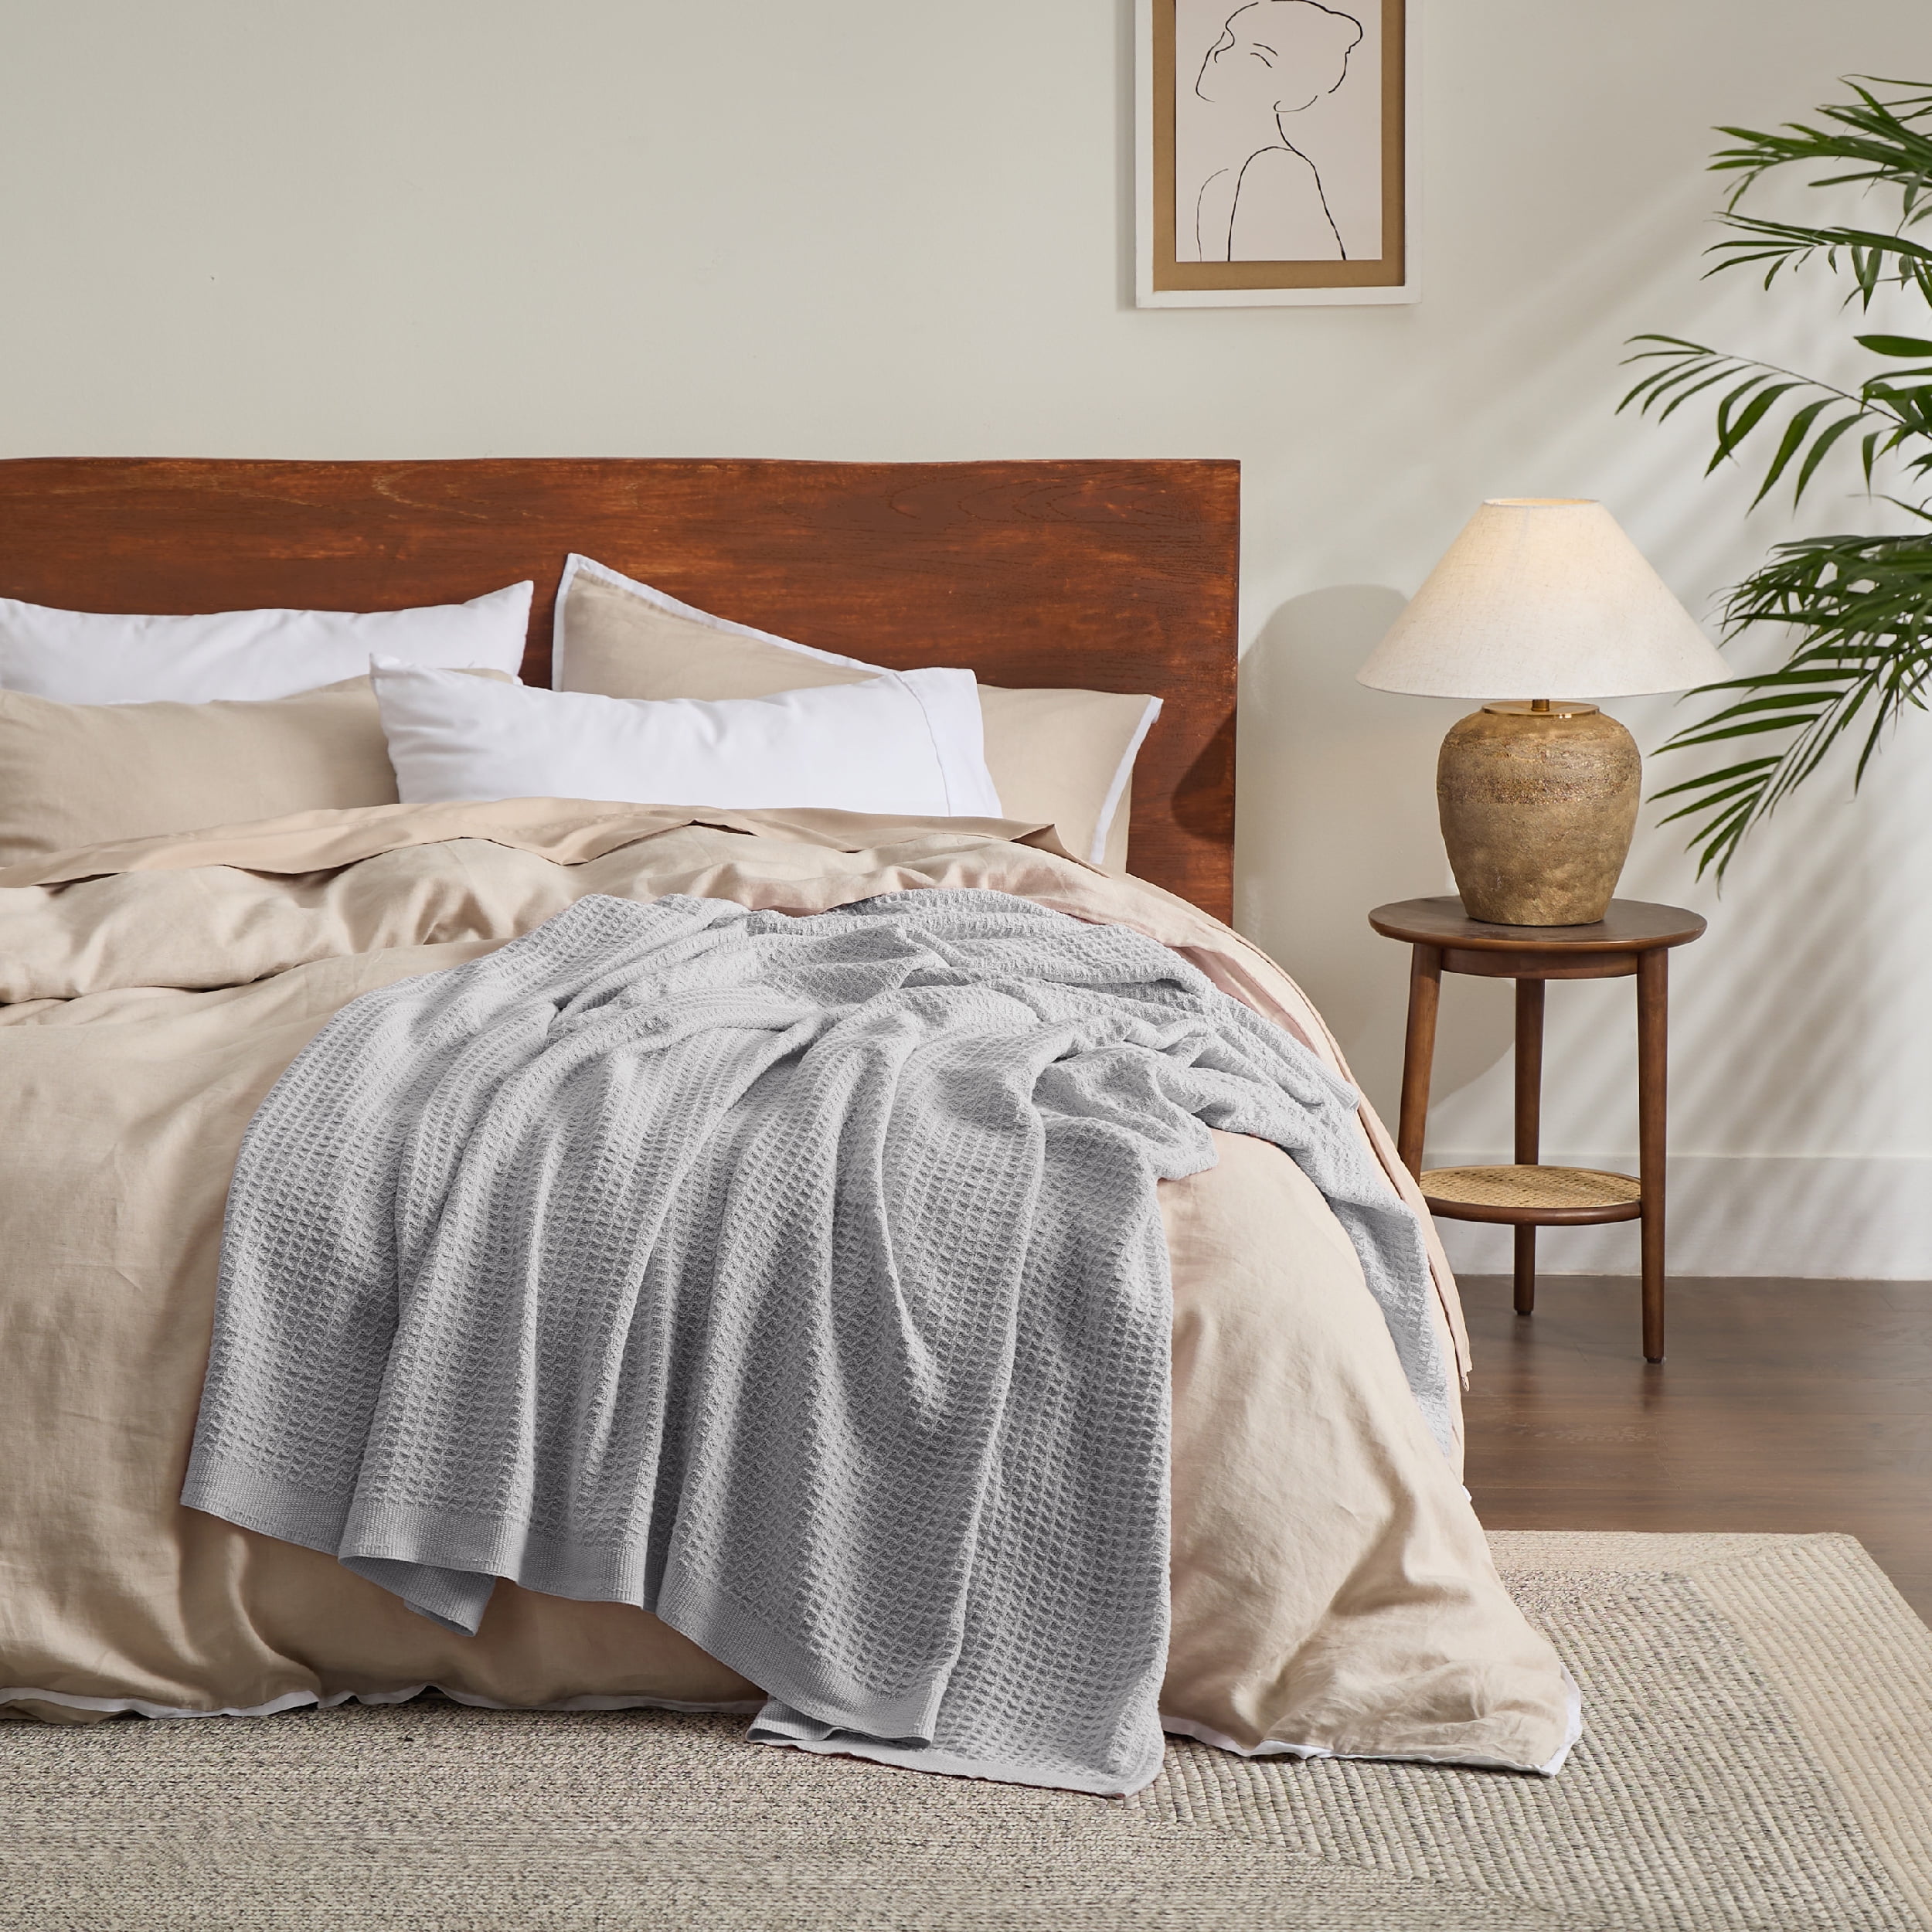 Bedsure 100% Cotton Blankets Queen Grey - Waffle Weave Blankets